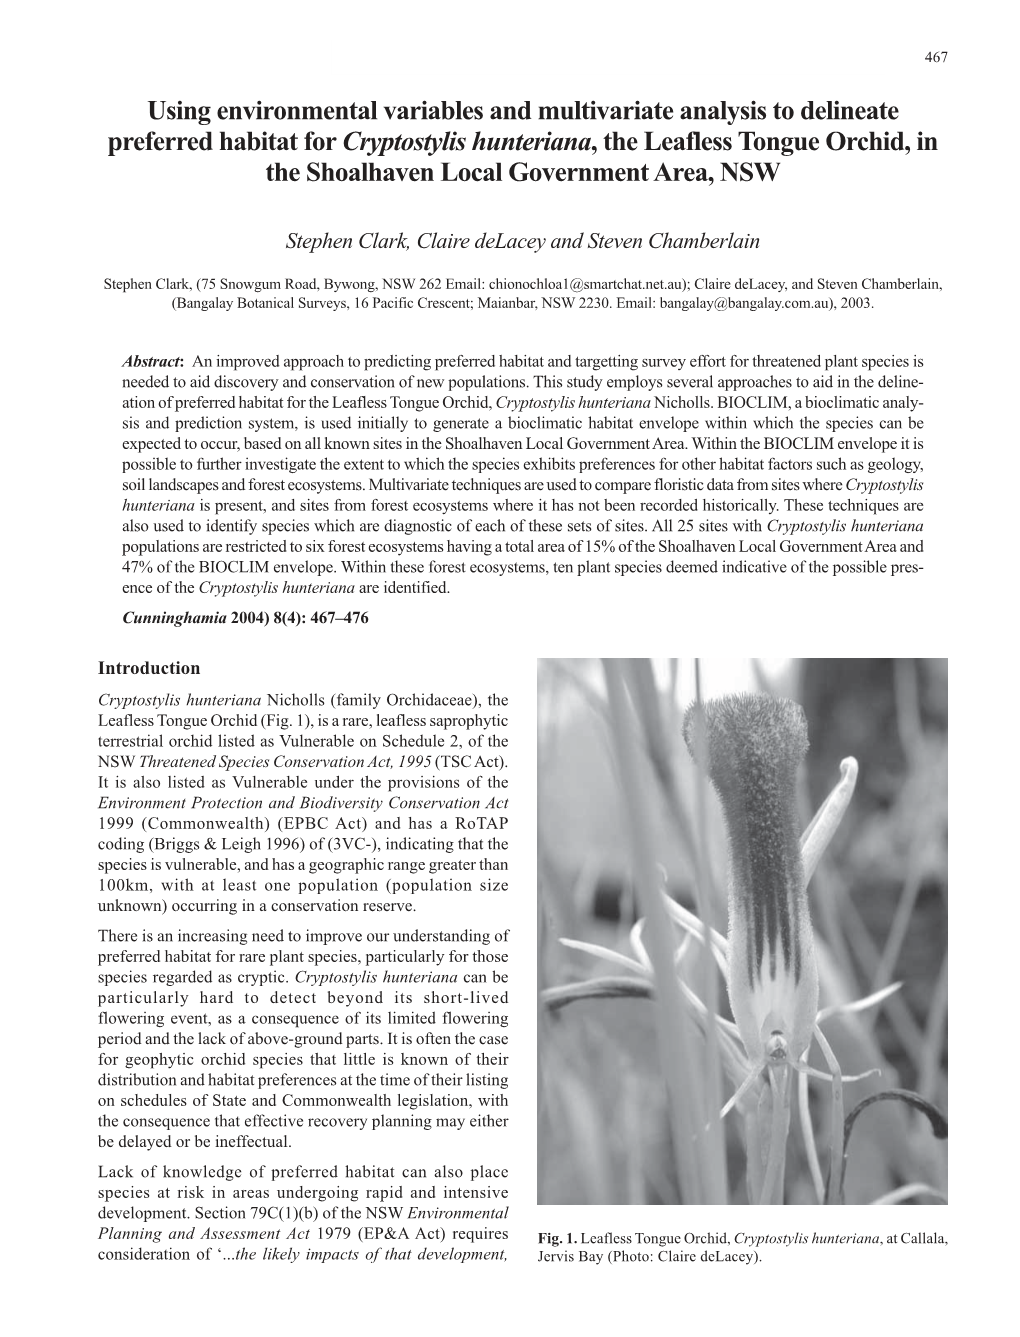 Clark Et Al., Preferred Habitat for Cryptostylis Hunteriana, the Leafless Tongue Orchid 467